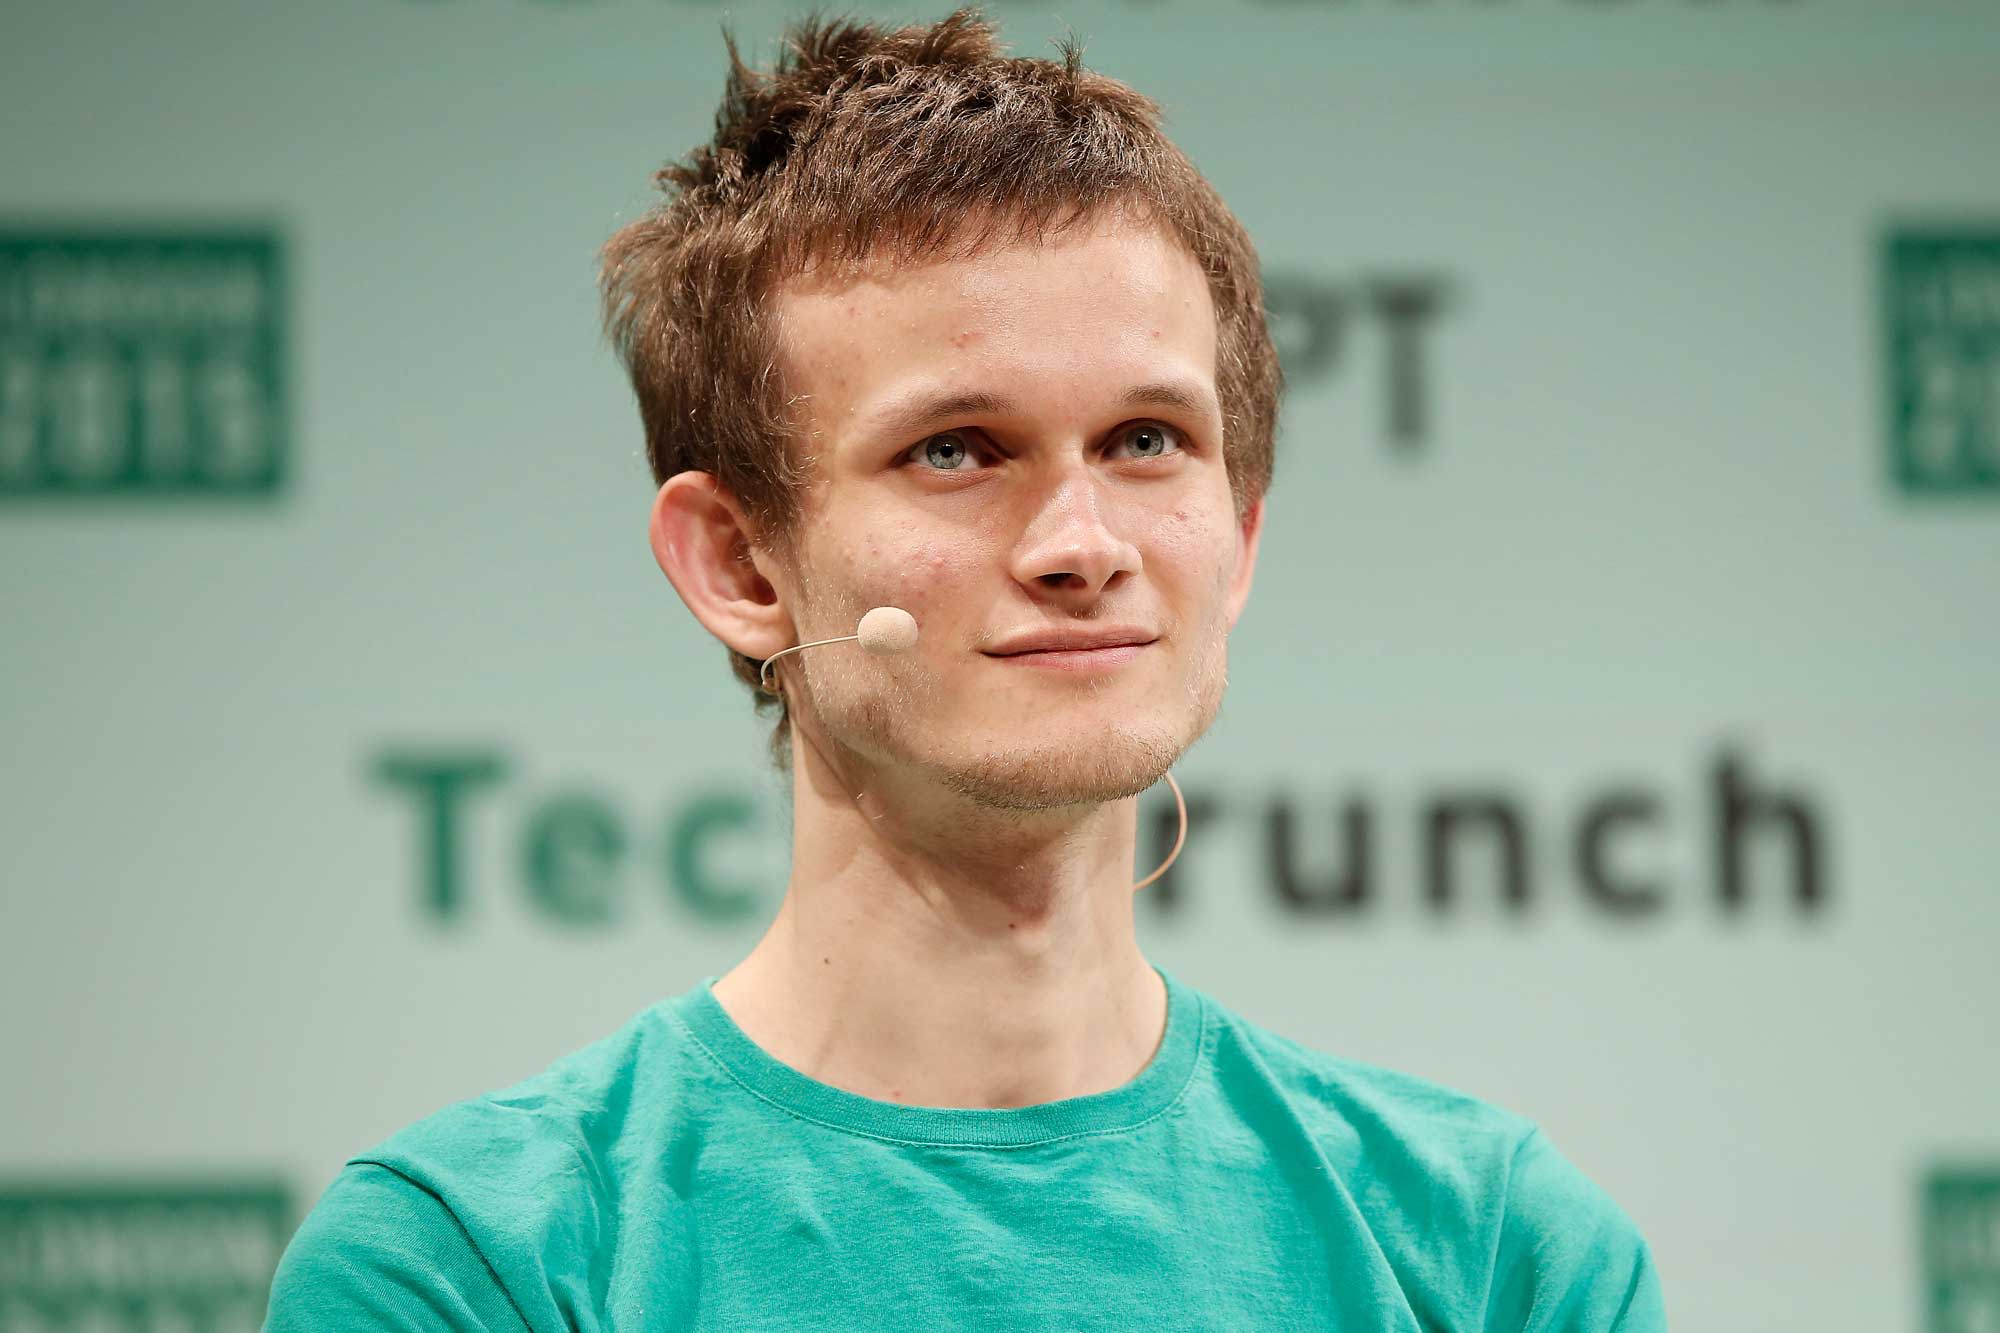 Ethereum-Gründer Vitalik Buterin ist jüngster Krypto-Milliardär